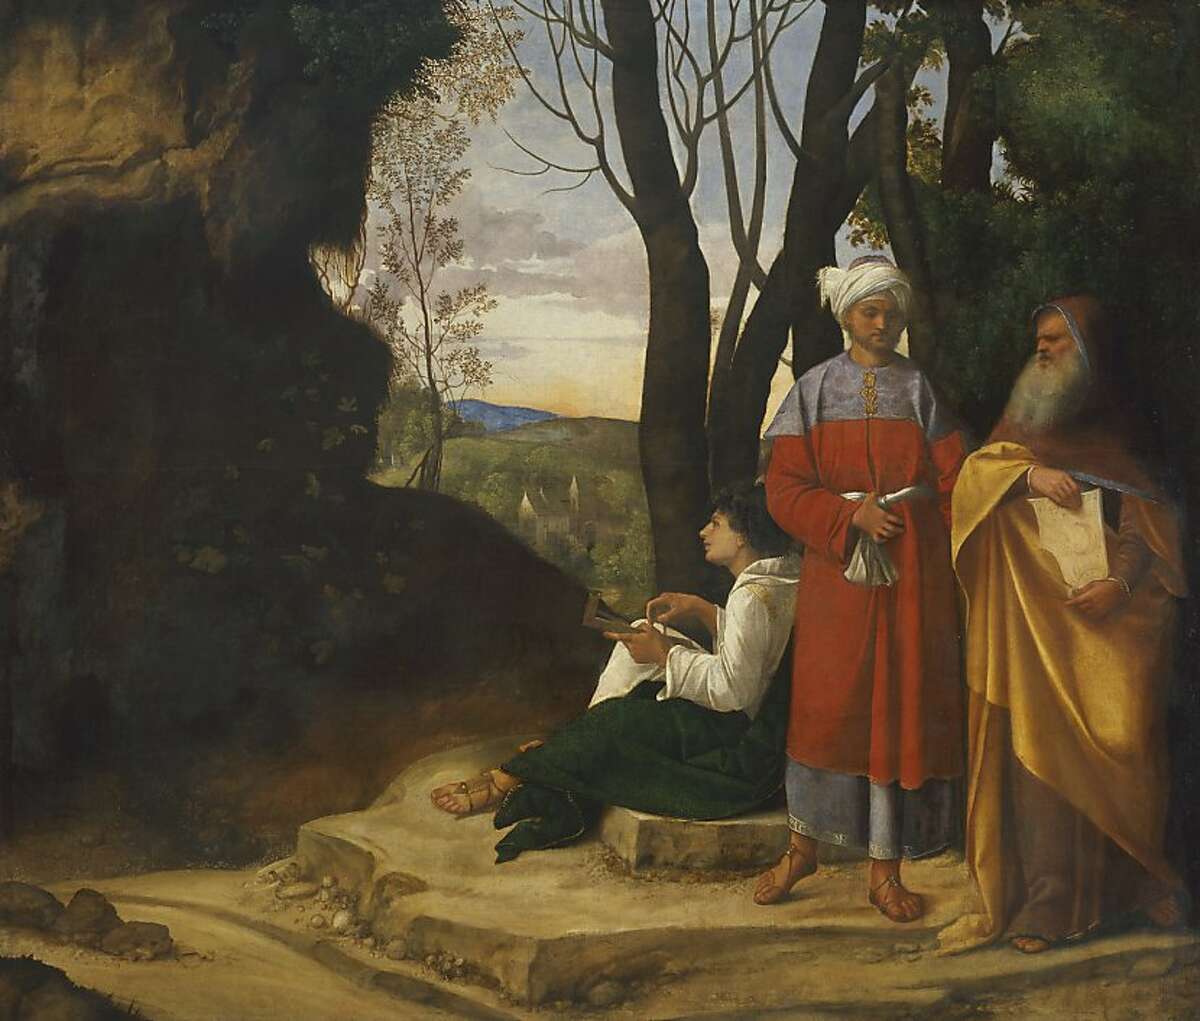 Giorgio da Castelfranco, called Giorgione. The Three Philosophers. ca. 1508-1509. Oil on canvas. Gemäldegalerie of the Kunsthistorisches Museum, Vienna. GG_111_Neu.tif